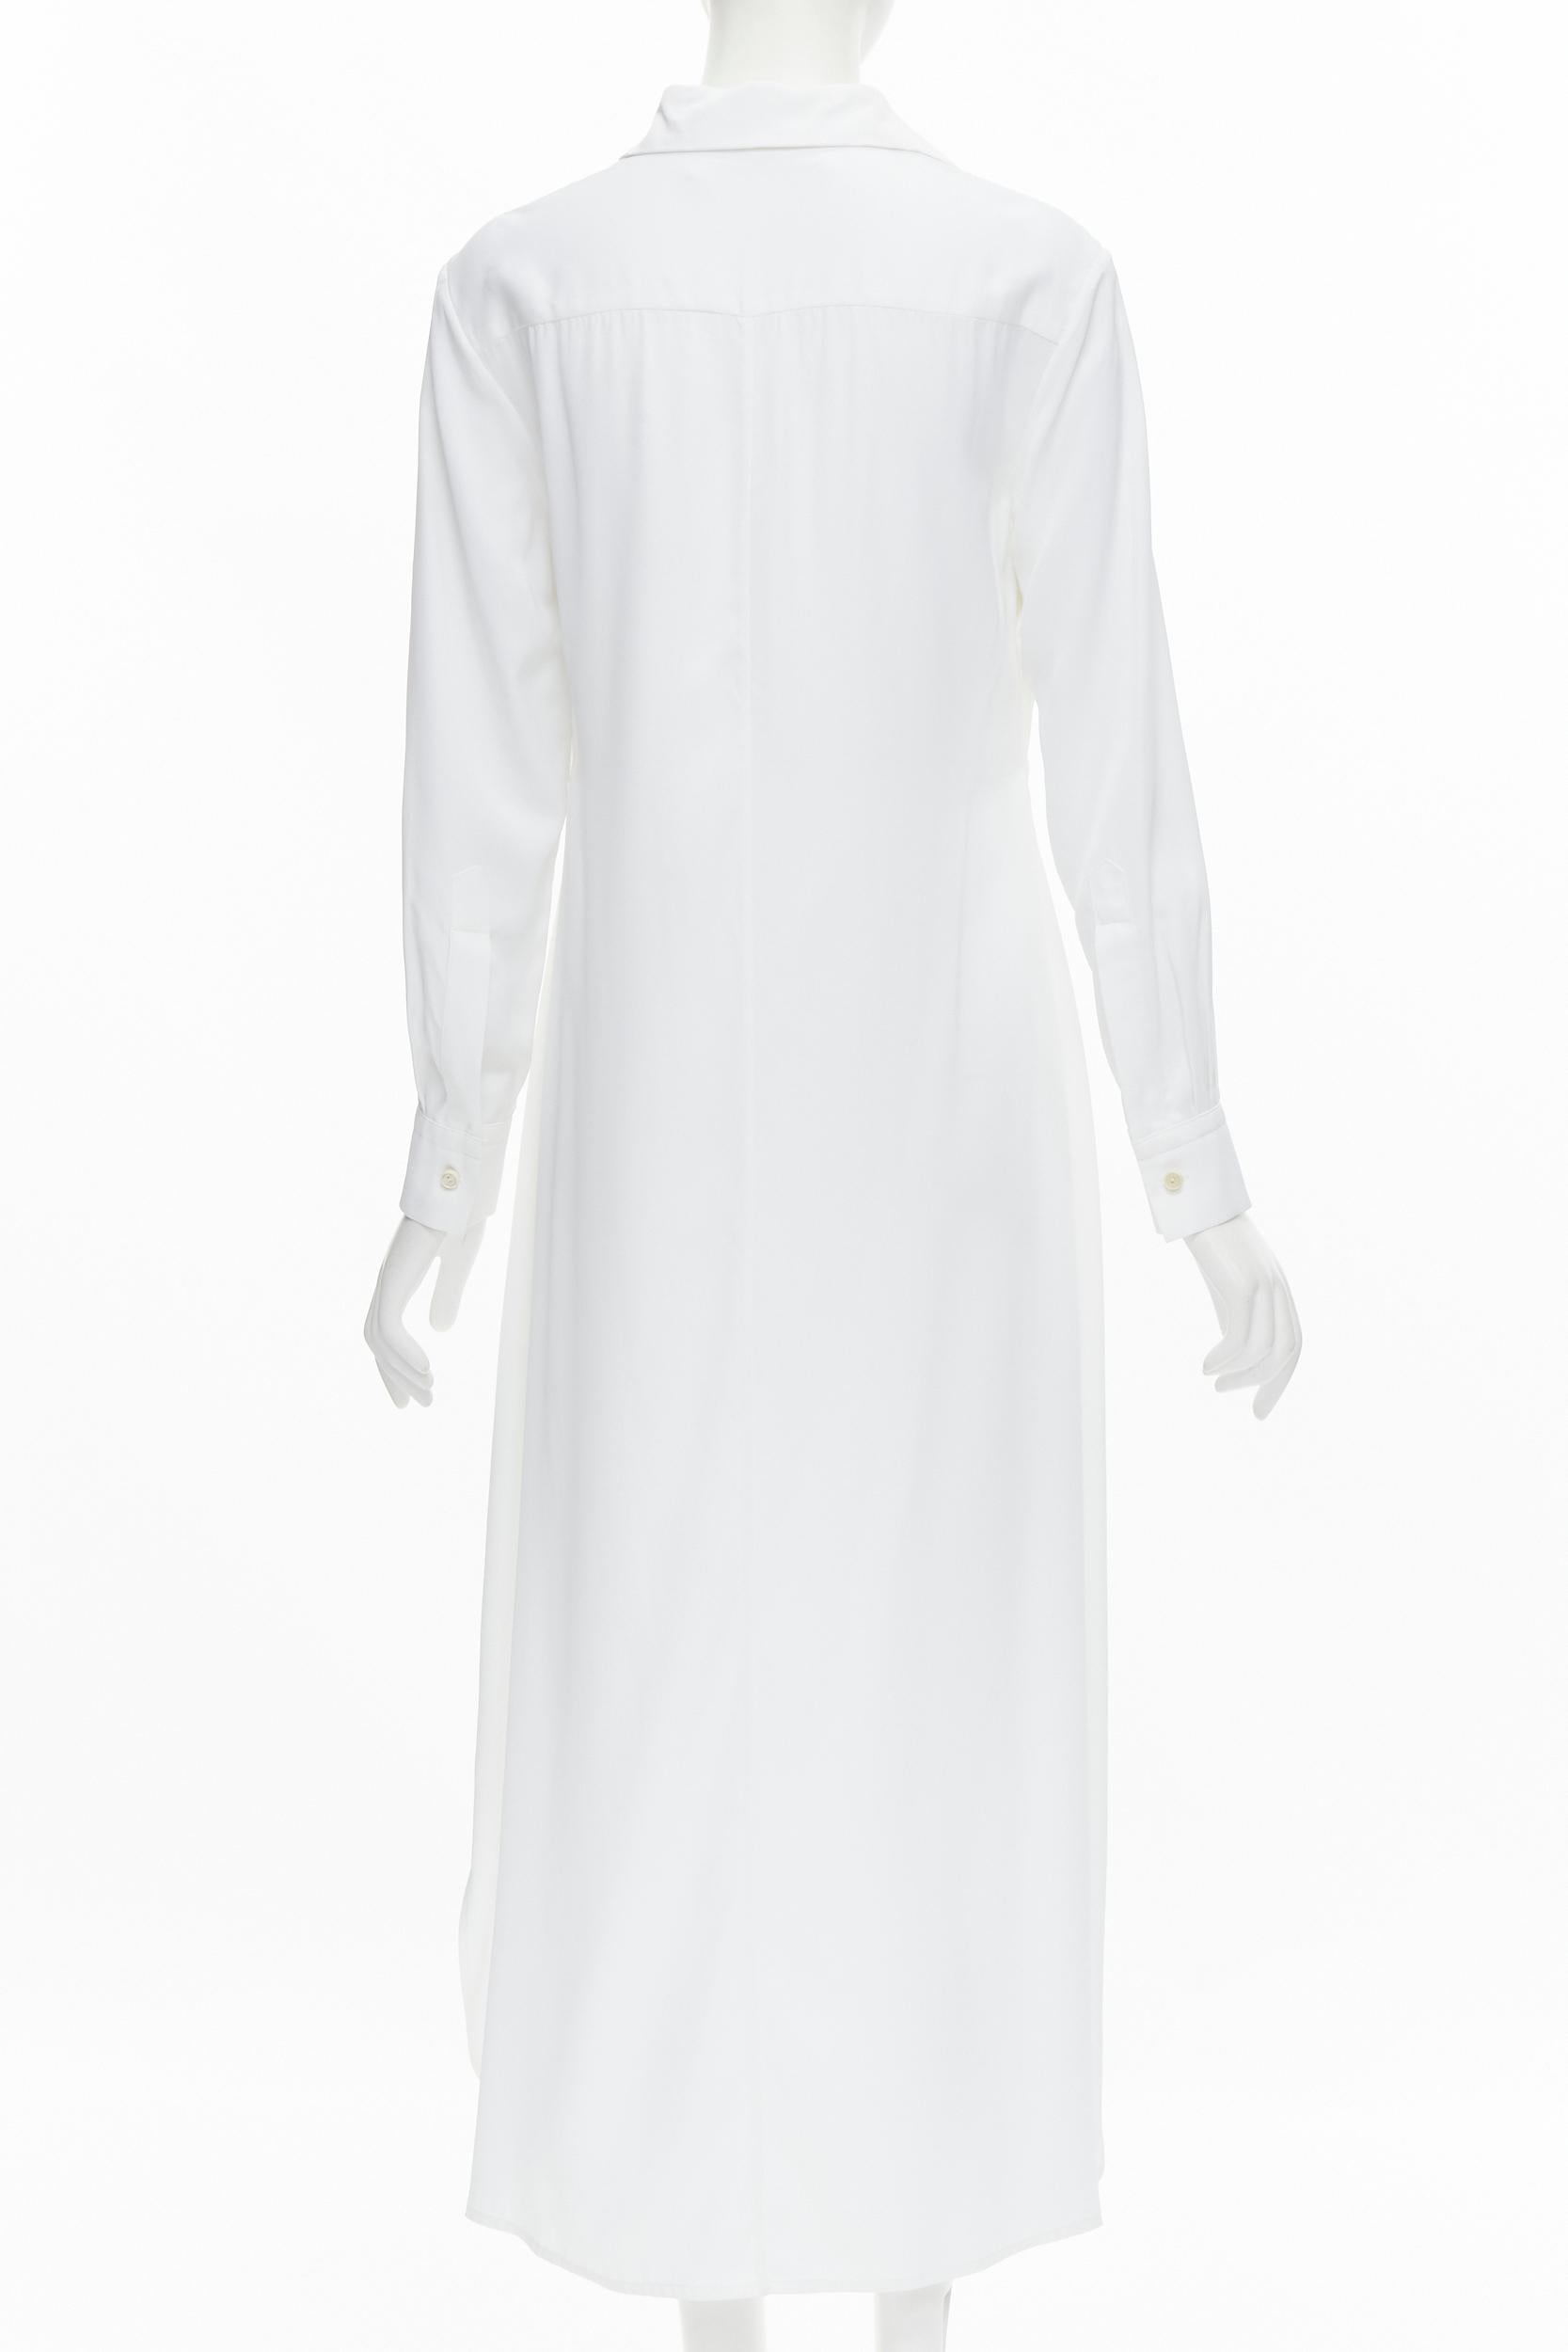 Women's ROSETTA GETTY white viscose  long sleeve high low train hem shirt top US2 XS For Sale